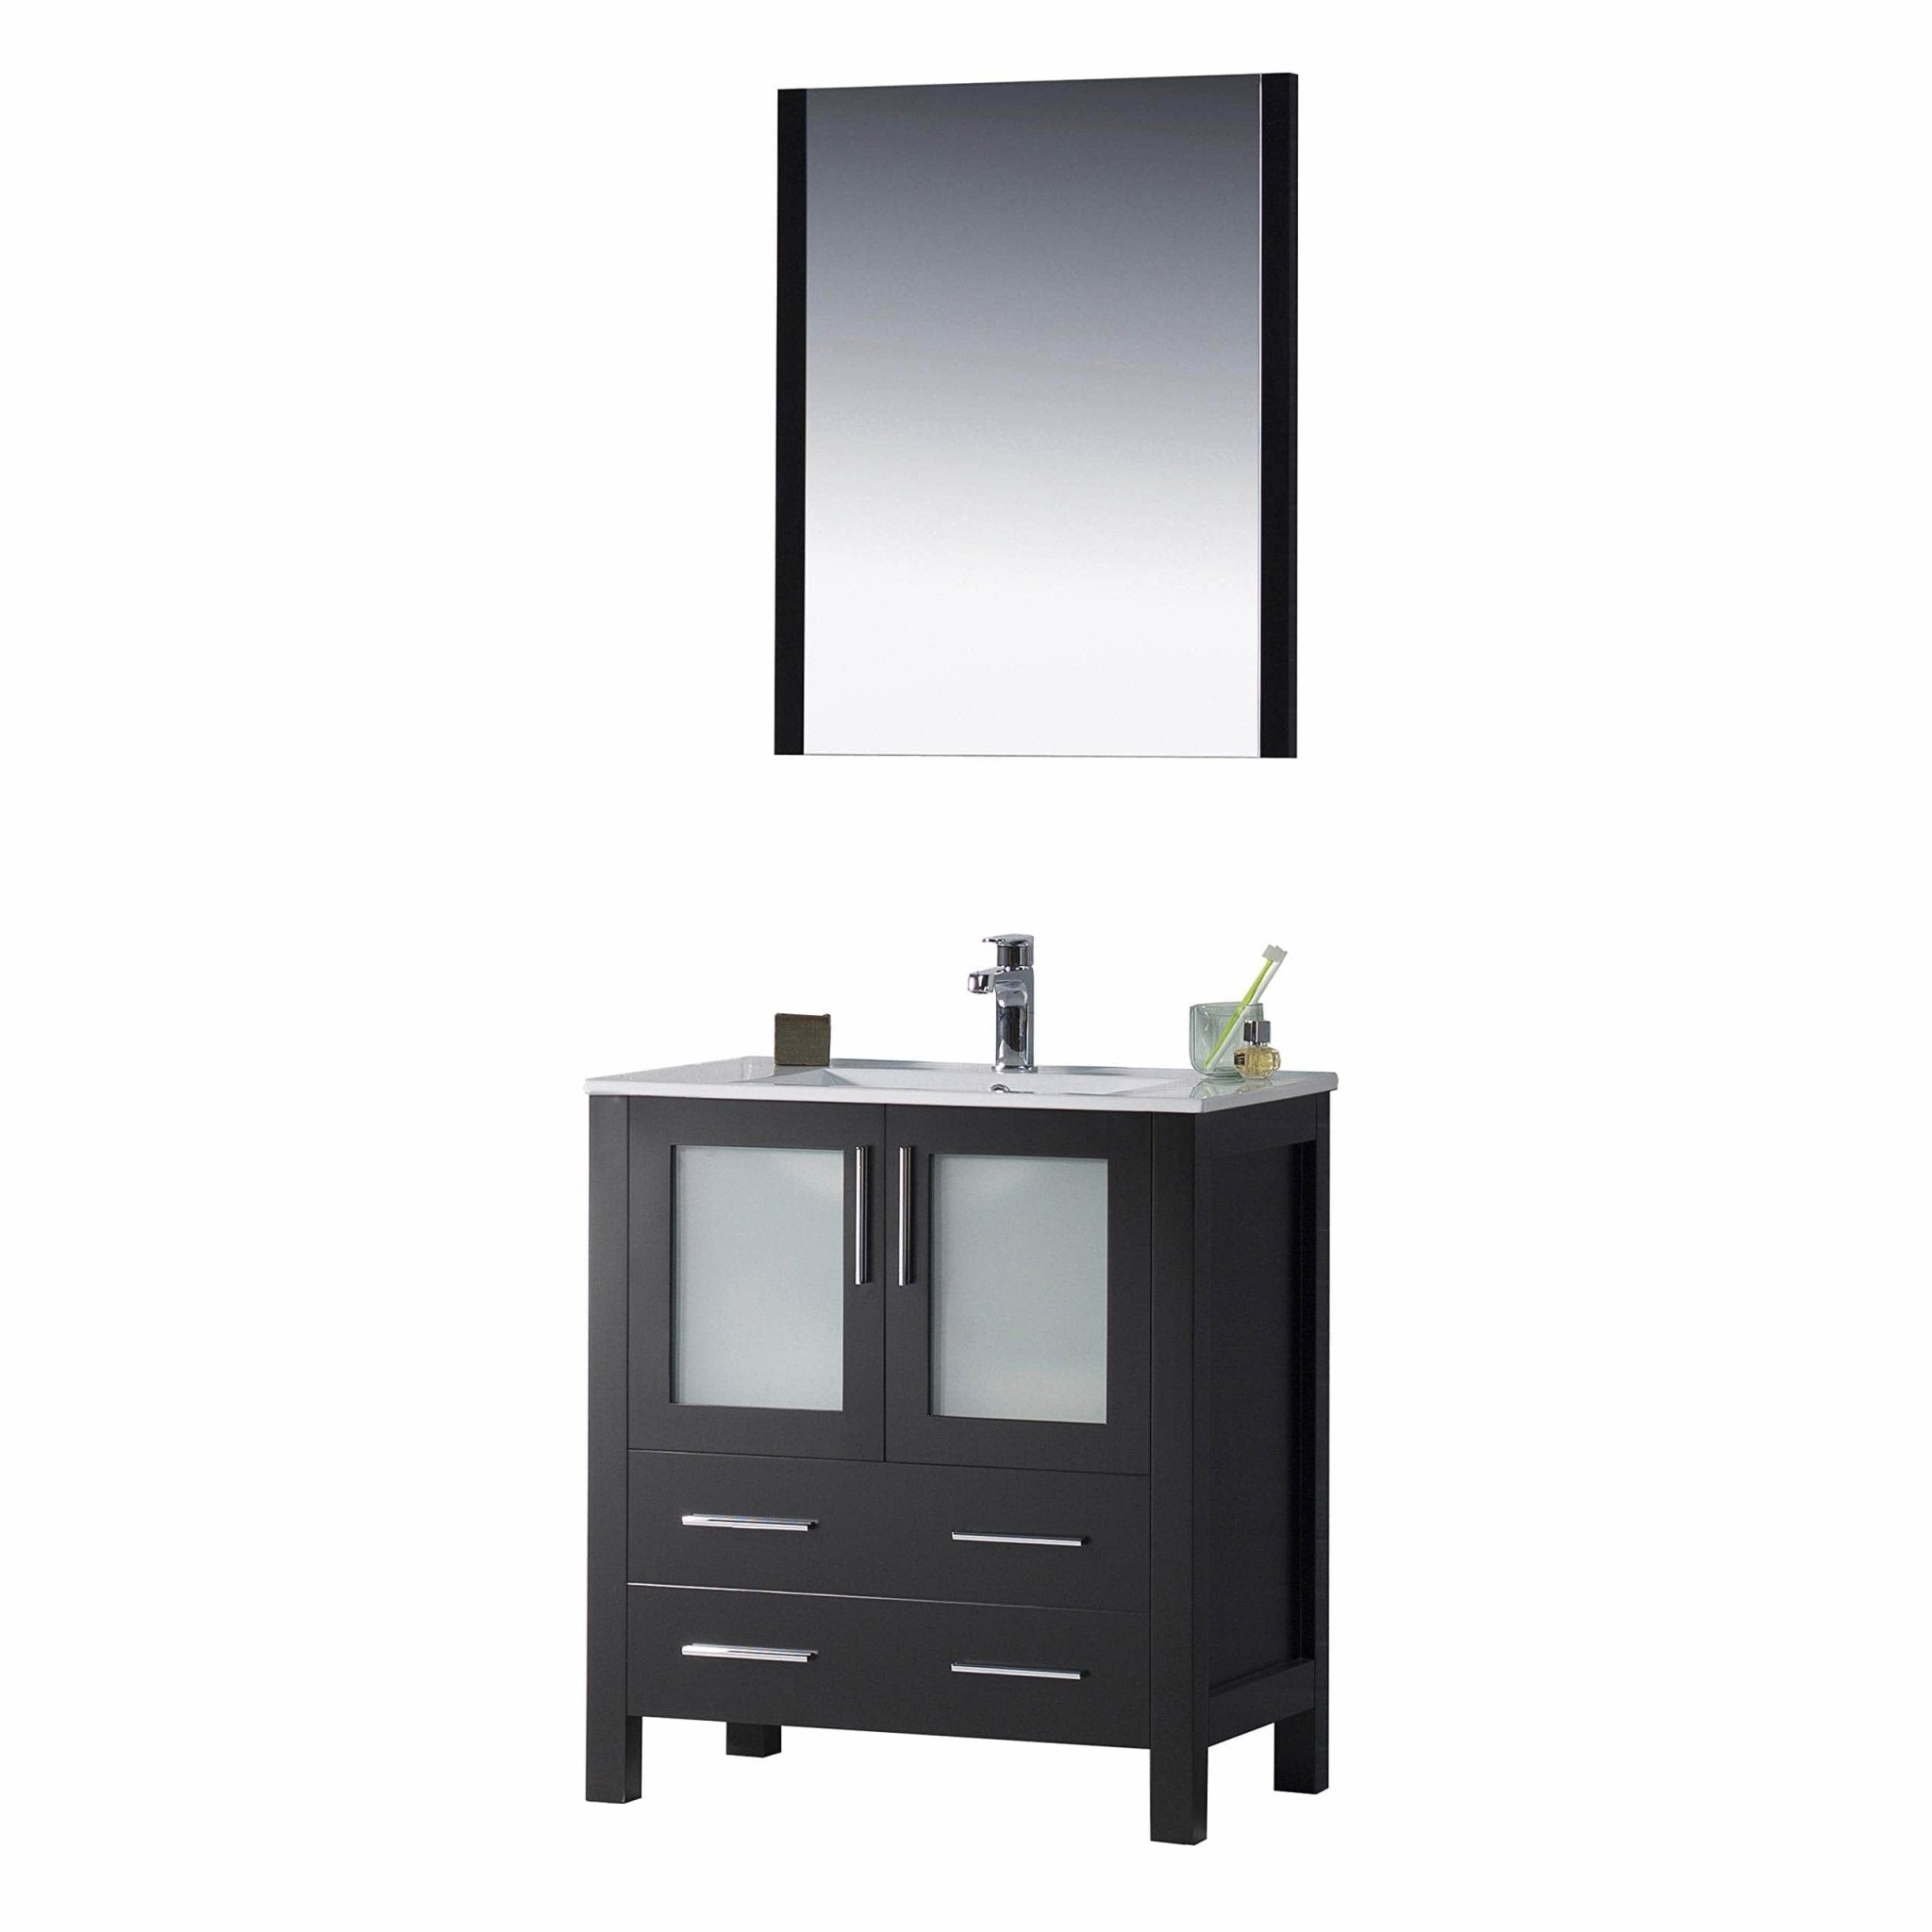 Sydney - 30 Inch Vanity with Ceramic Sink & Mirror - Espresso - Molaix842708124424Sydney001 30 02 C M